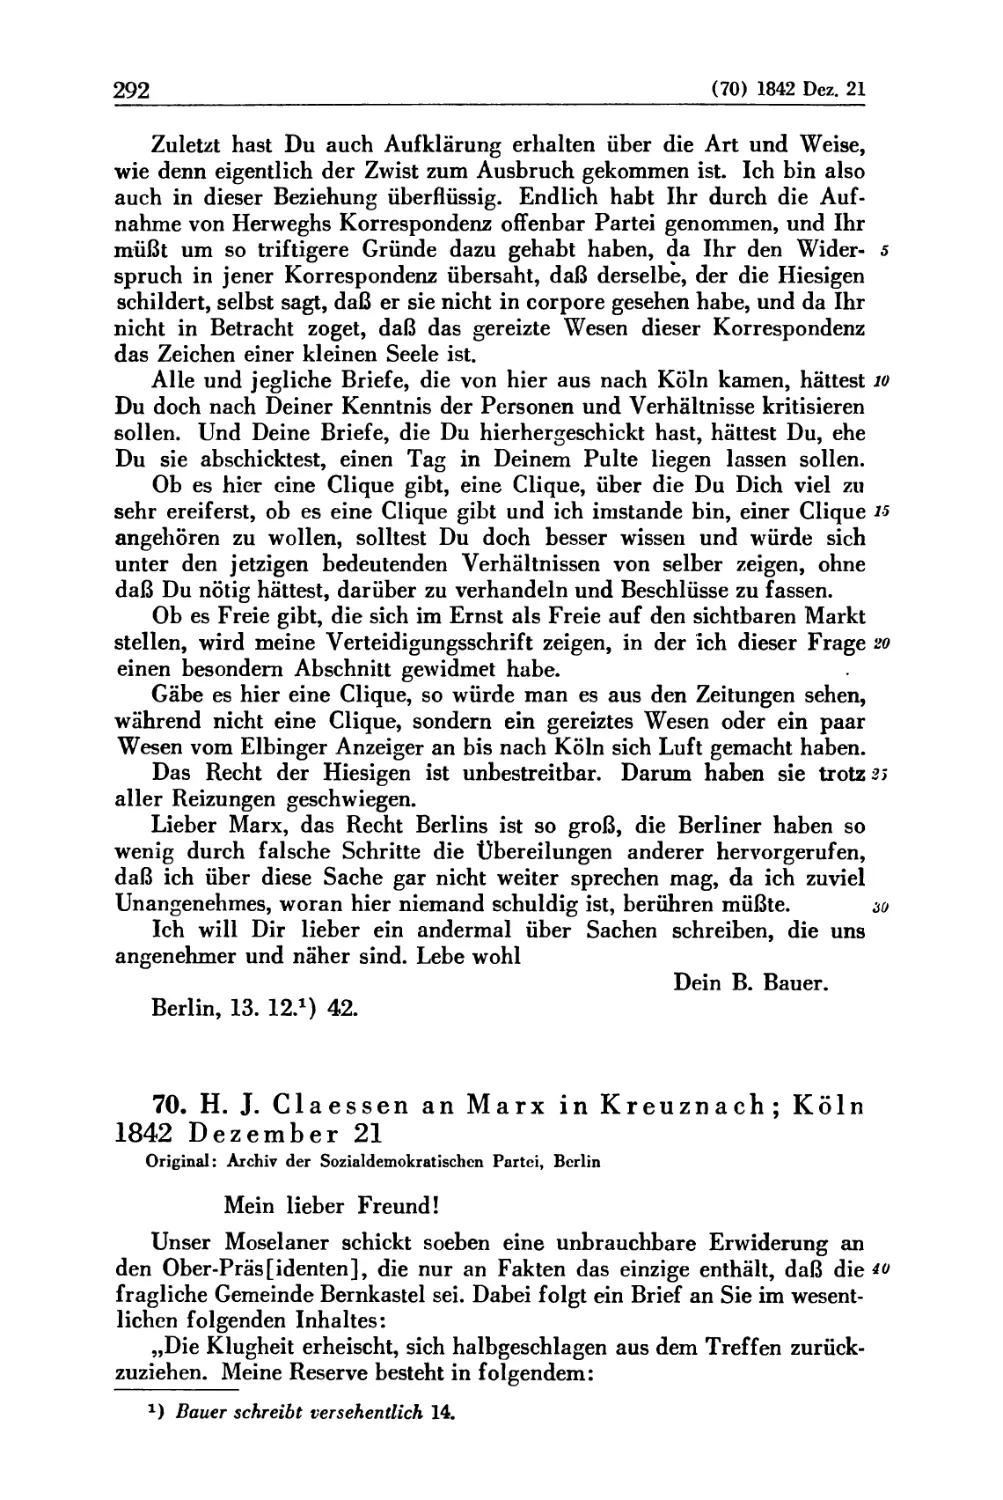 70. H. J. Claessen an Marx in Kreuznach; Köln 1842 Dezember 21